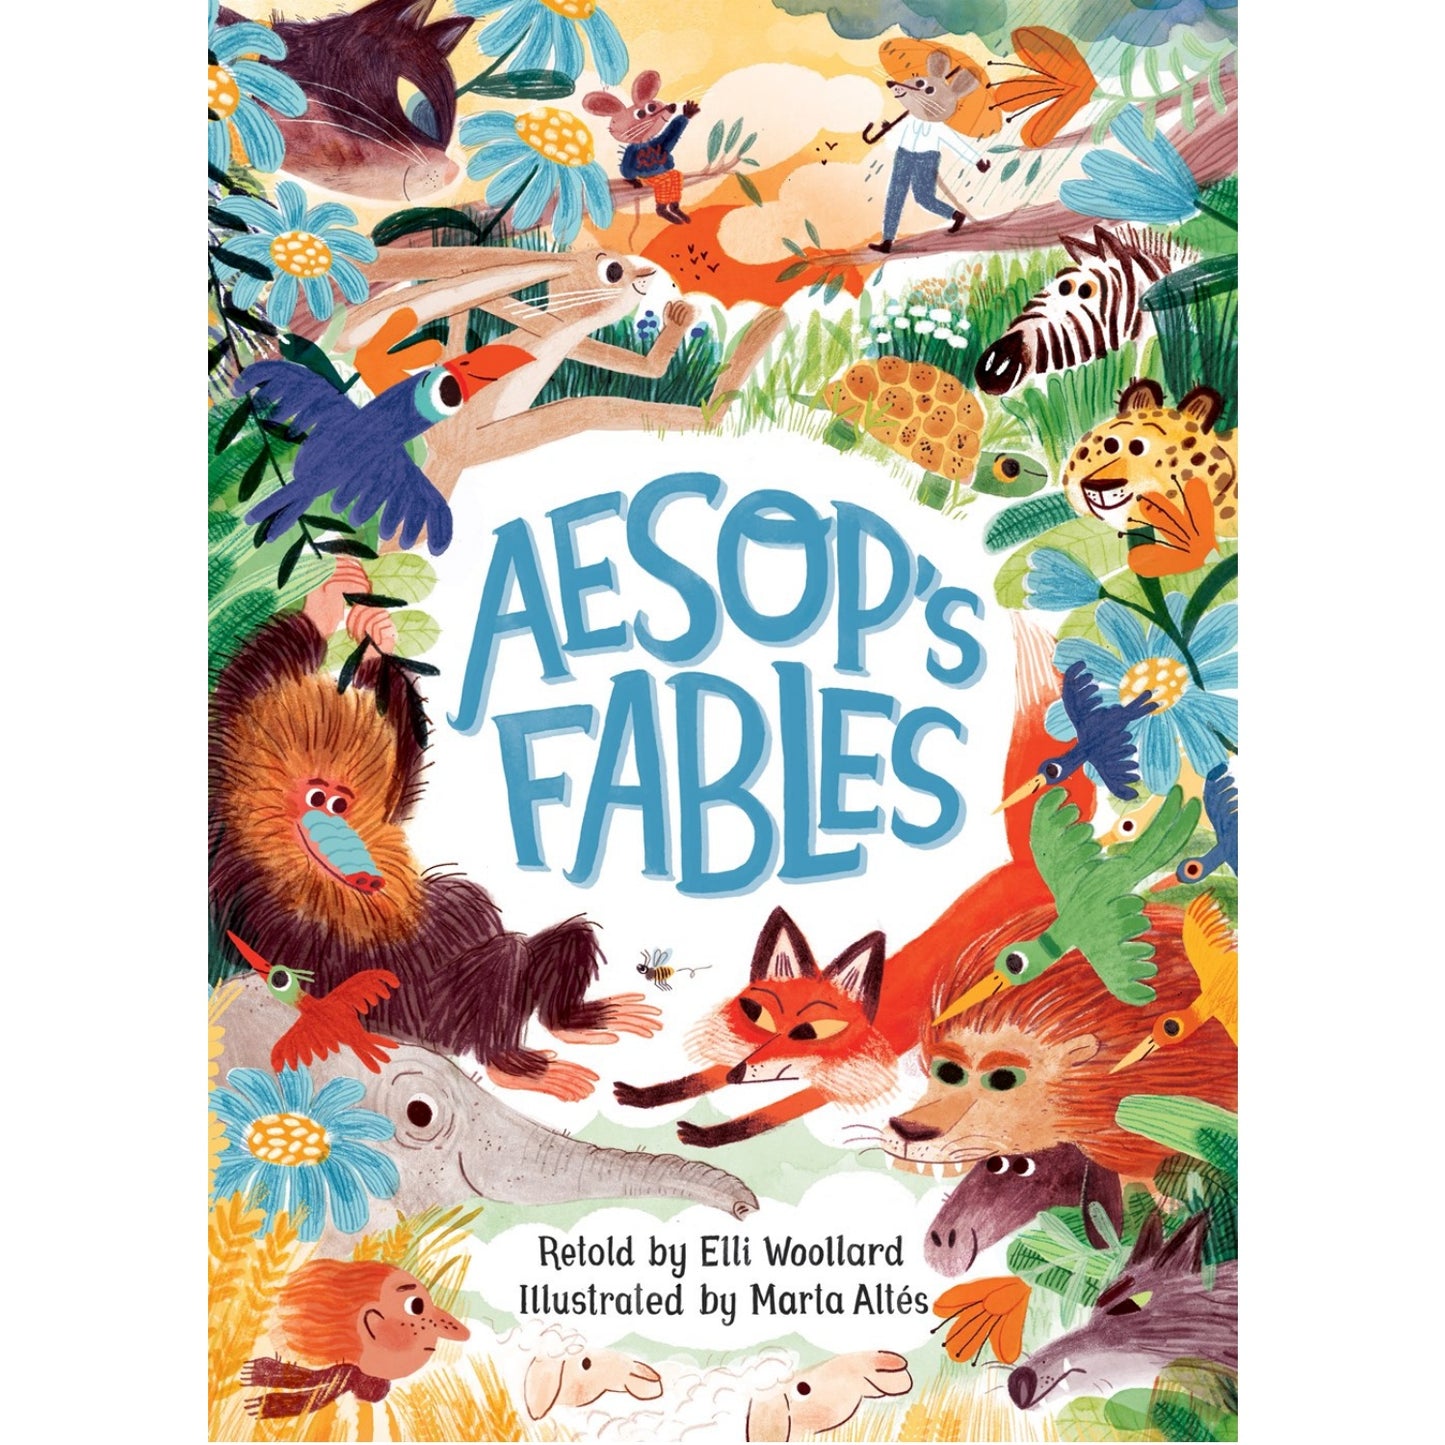 Aesop's Fables, Retold by Elli Woollard | Children's Book on Tales & Adventures